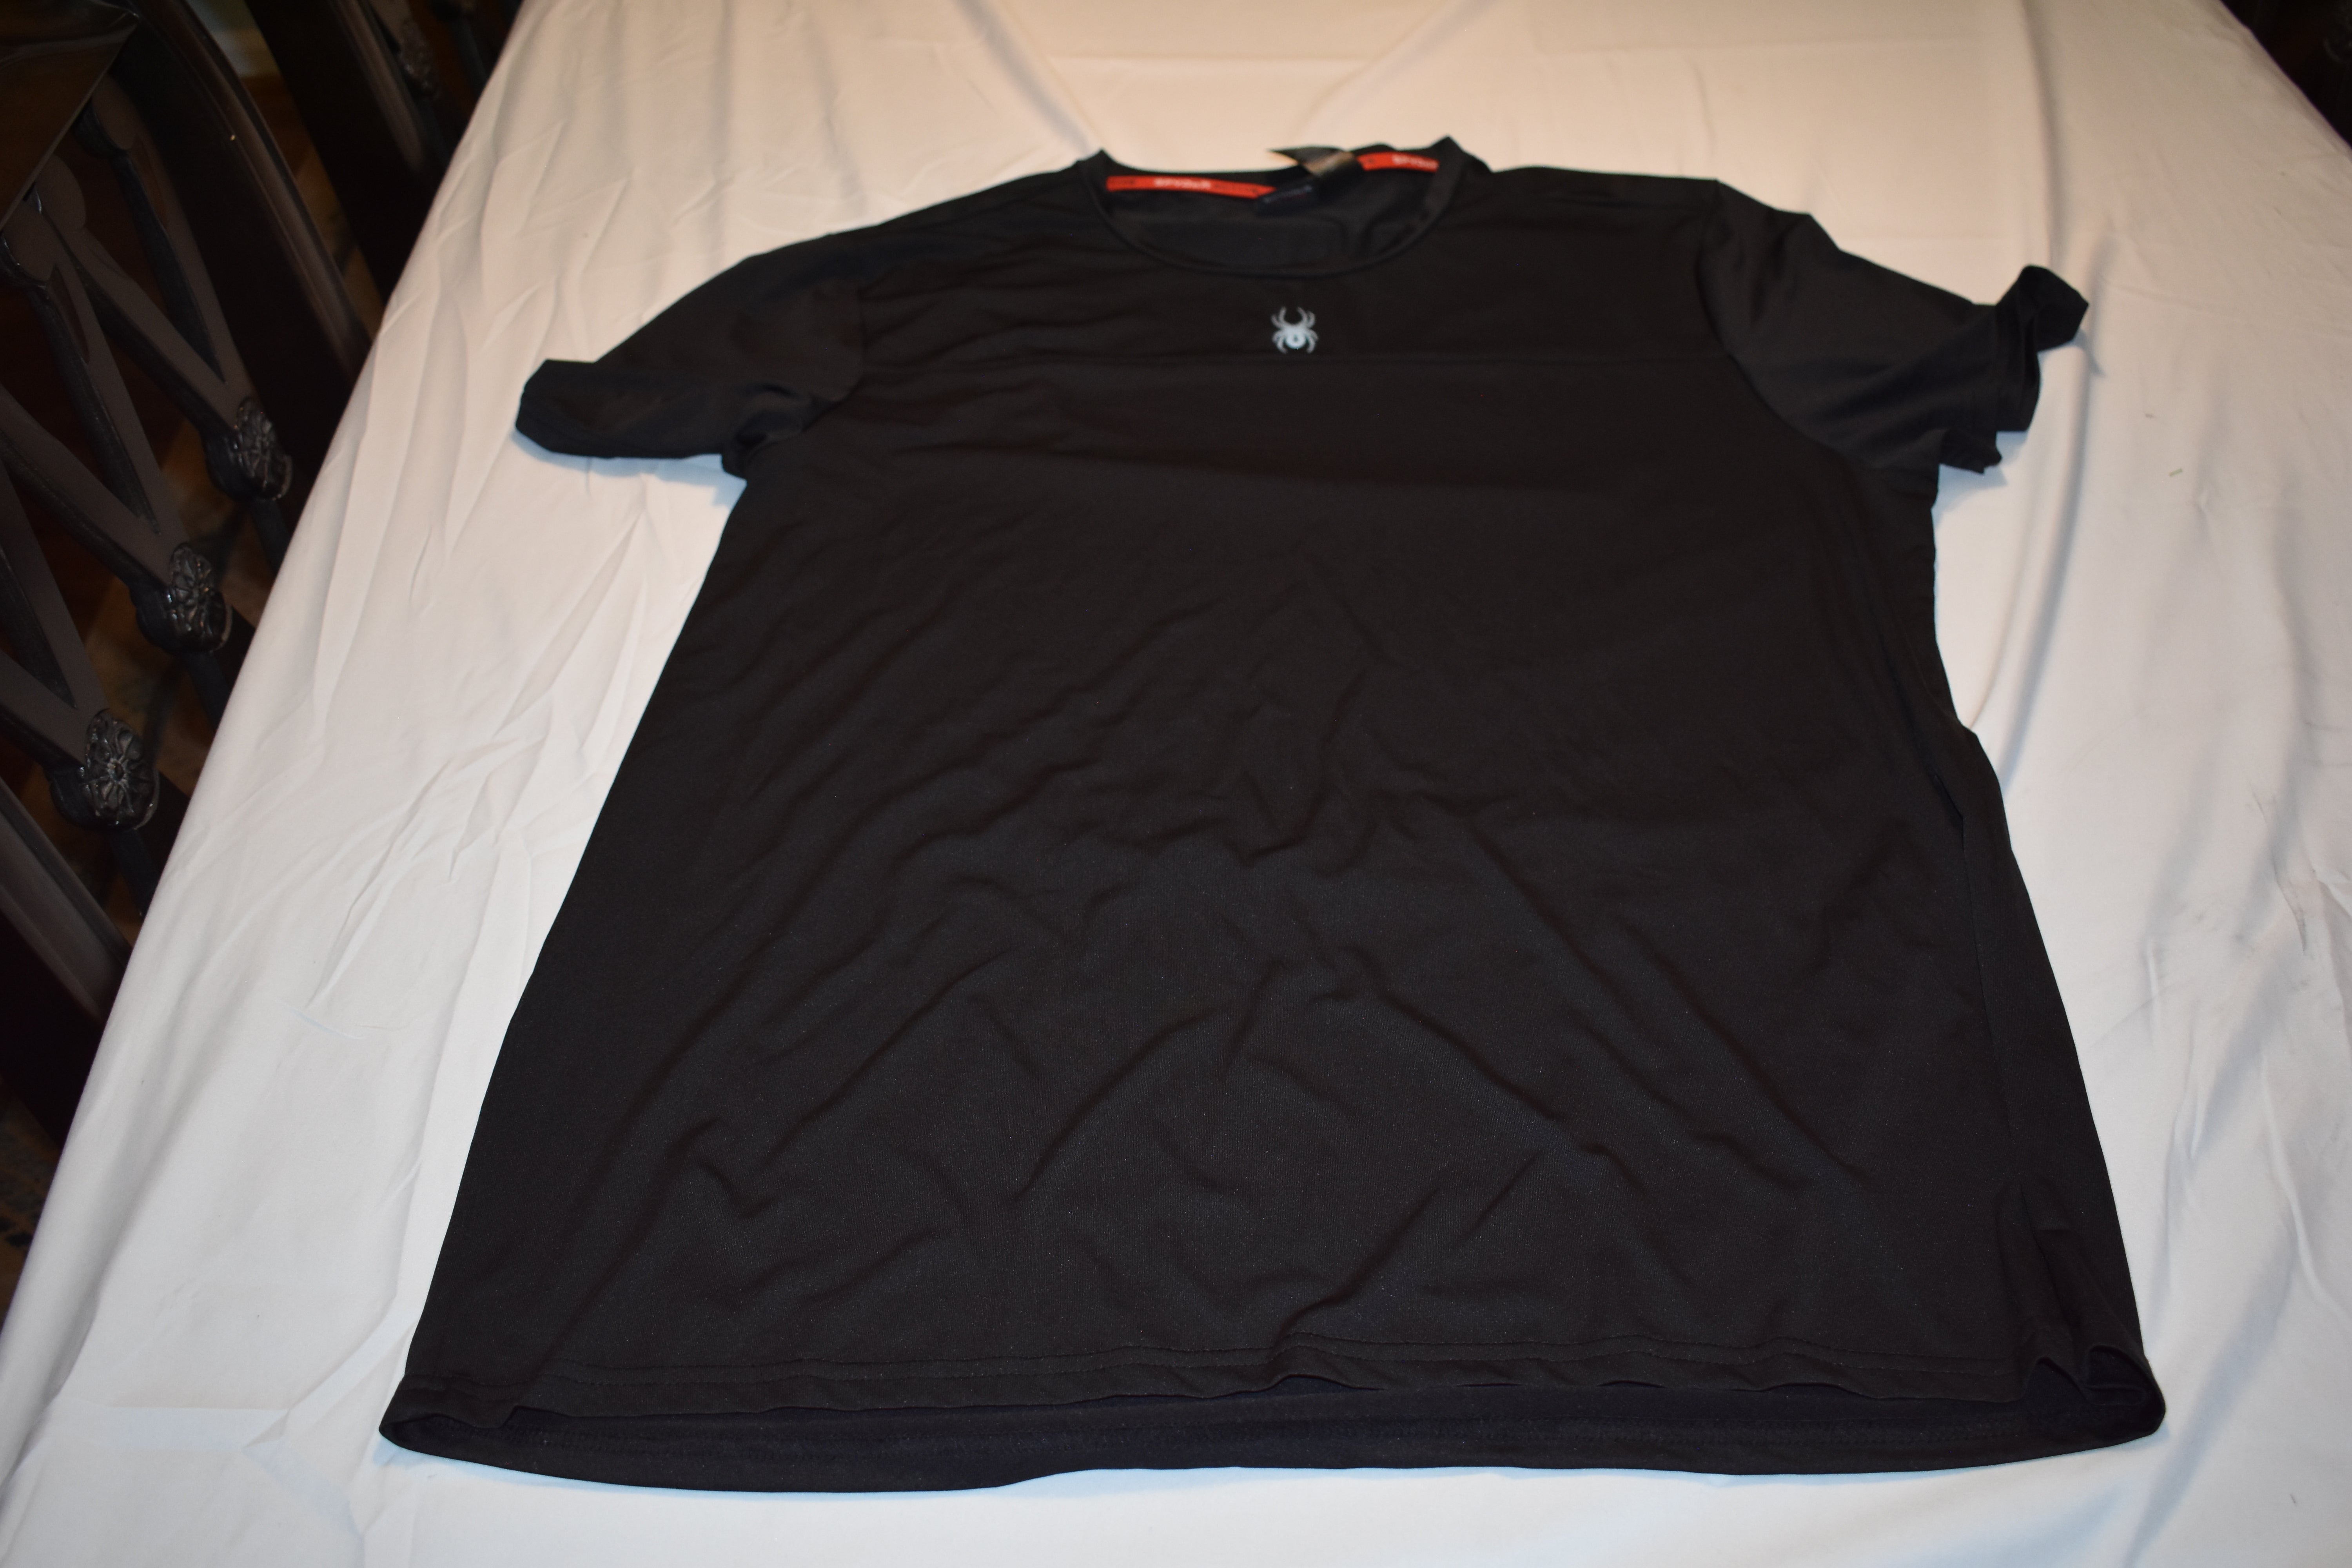 Boy's Xersion Long Sleeve Quick-Dri Shirt, Red/Black, medium (10